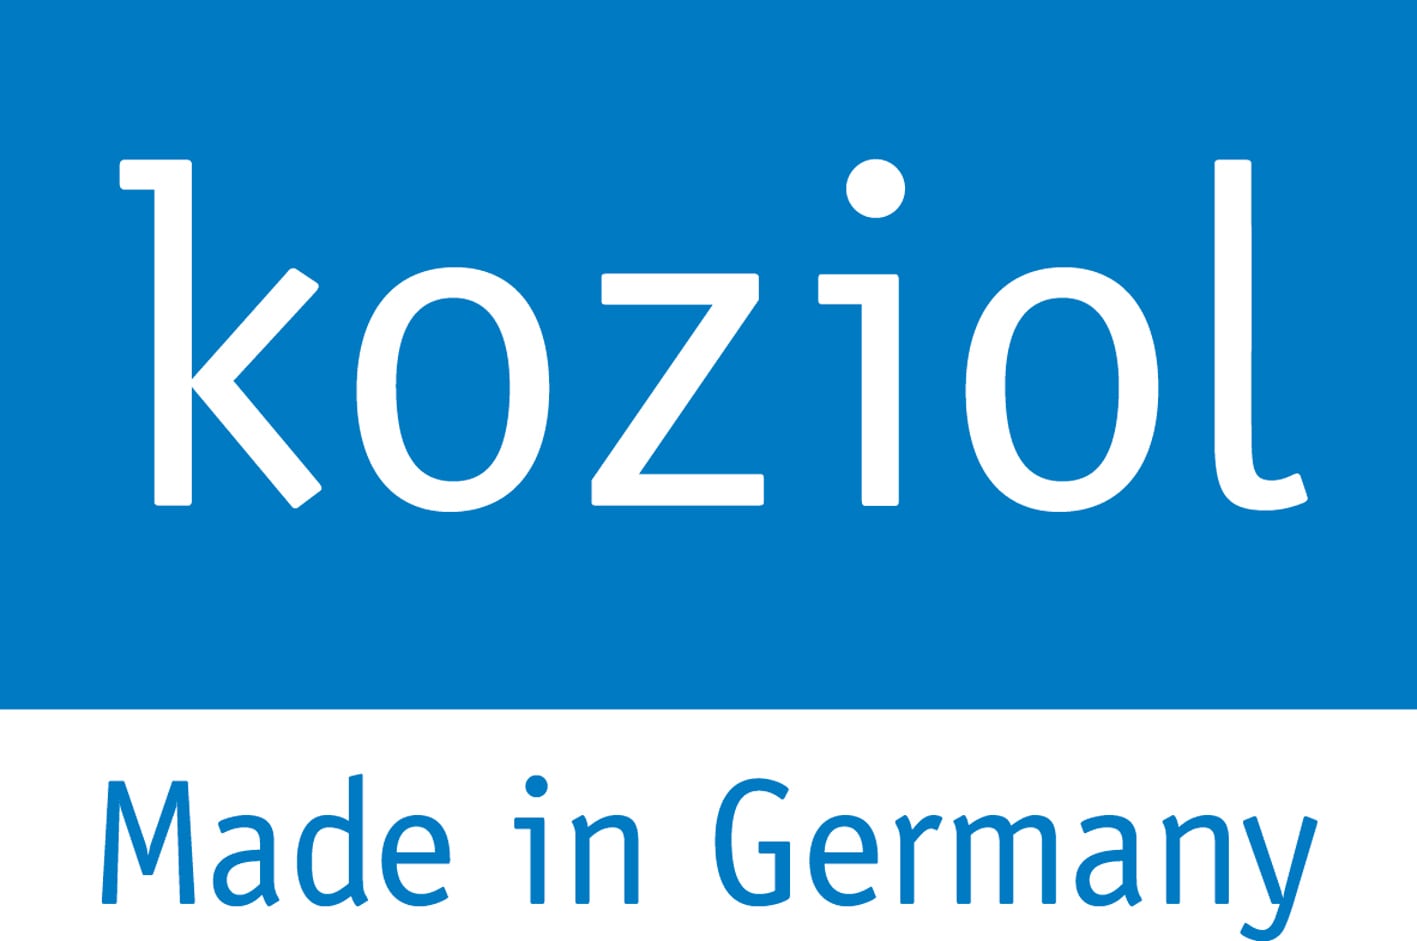 koziol-logo